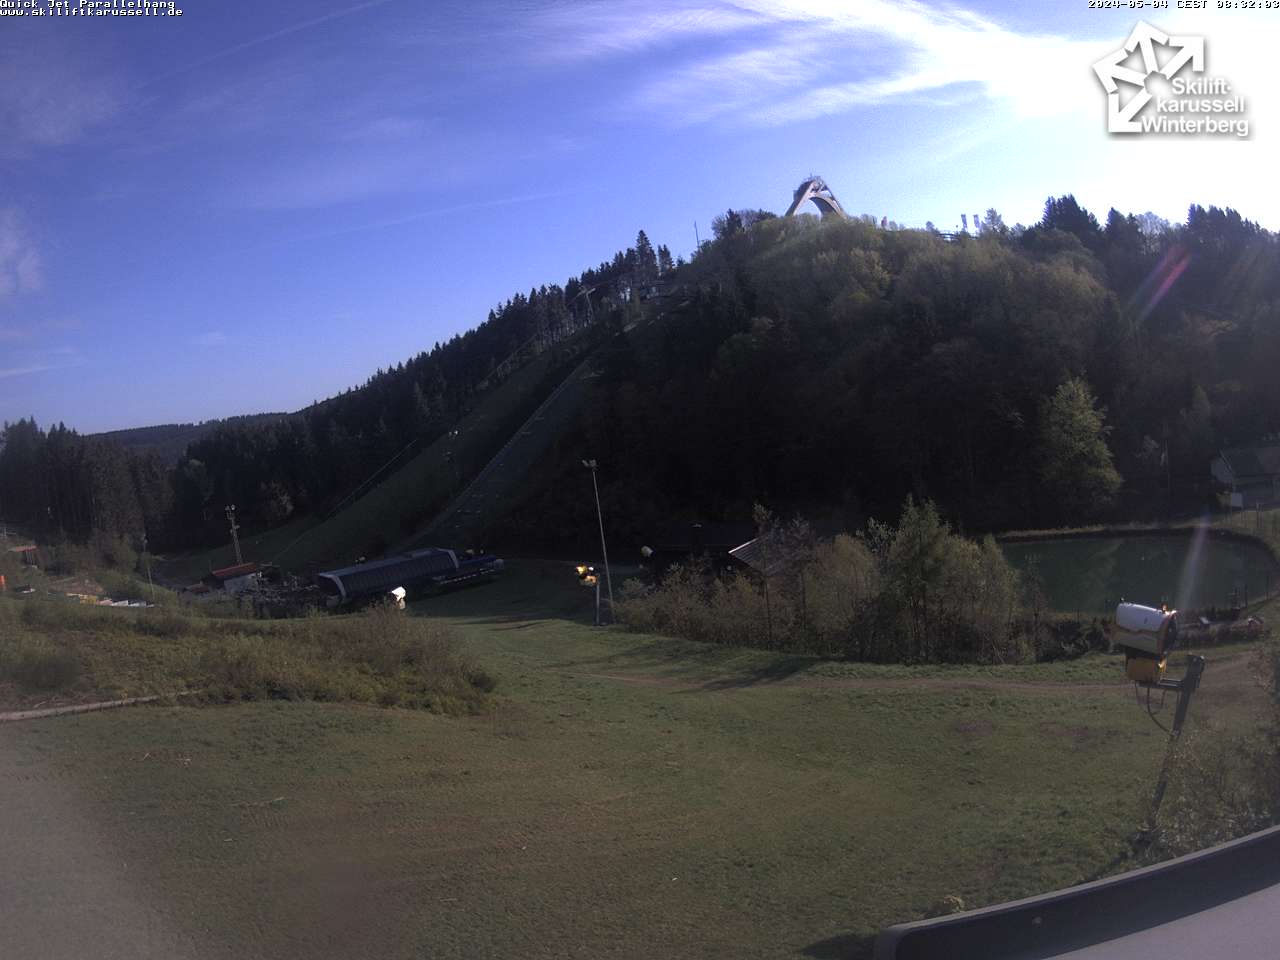 Webcam Quick Jet Parallelhang - Skiliftkarussell Winterberg